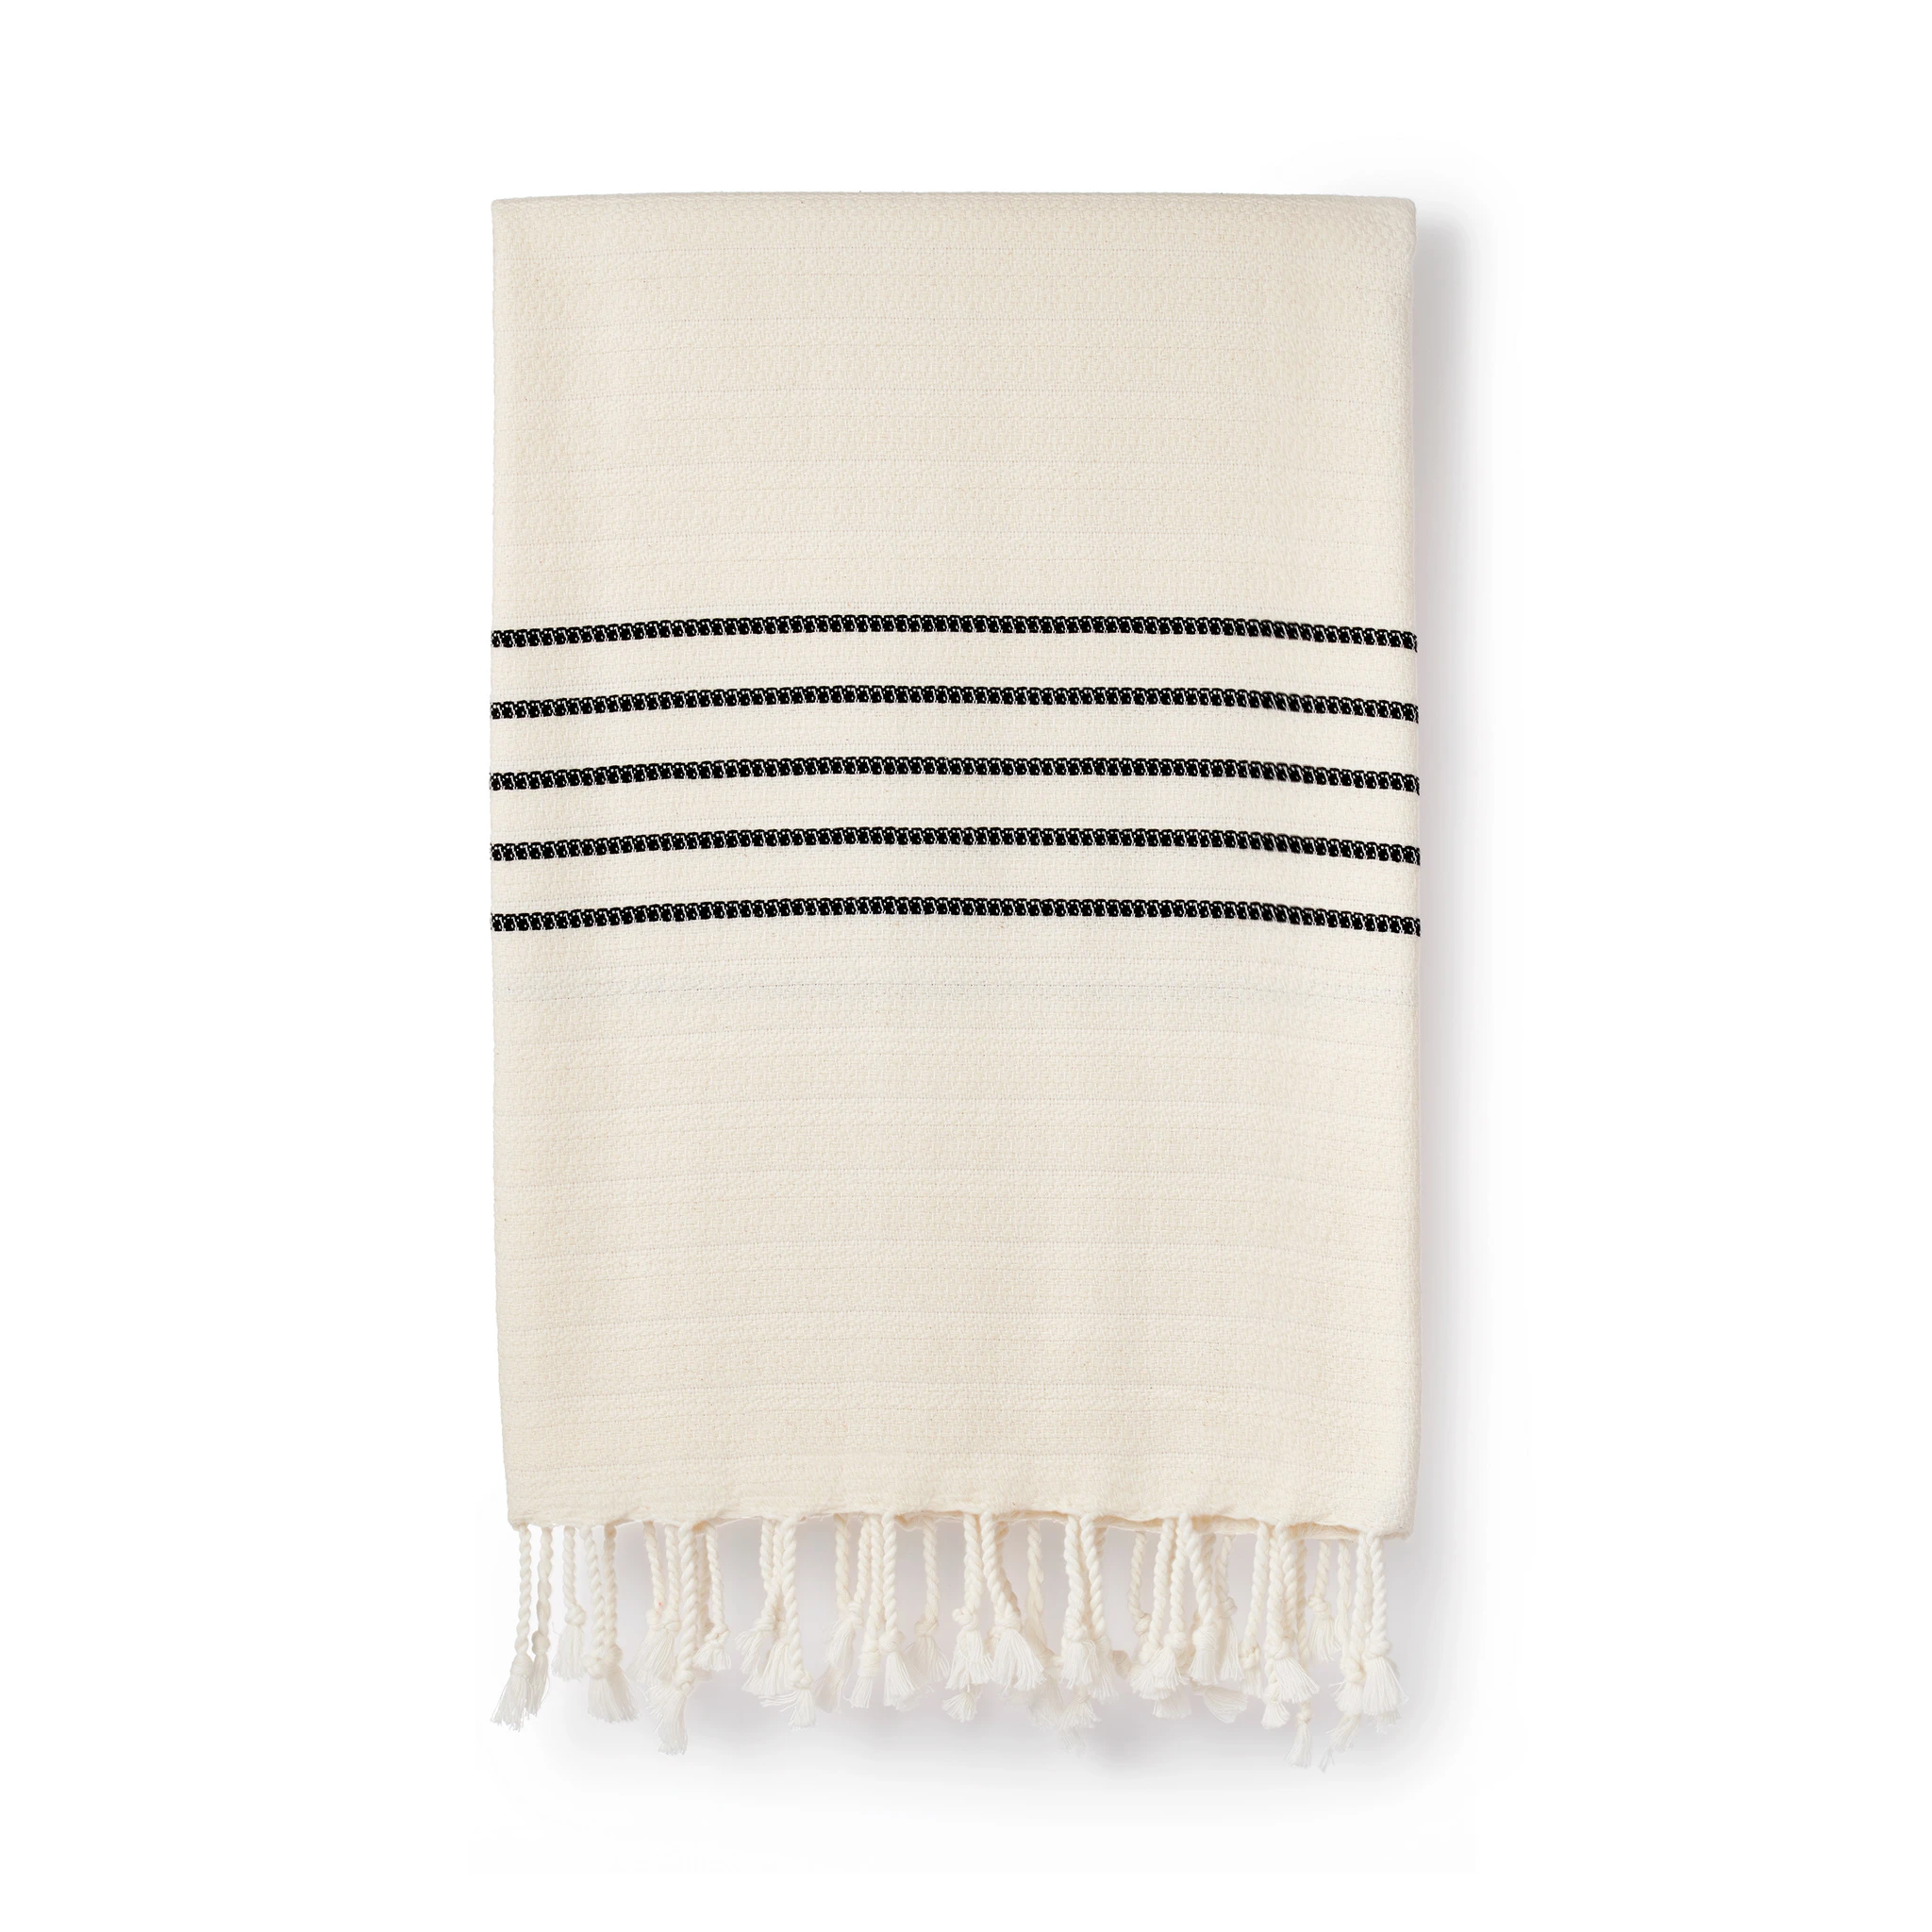 Luks Linen Cotton and Bamboo Turkish Peshtemal Towel in Idil Stripe